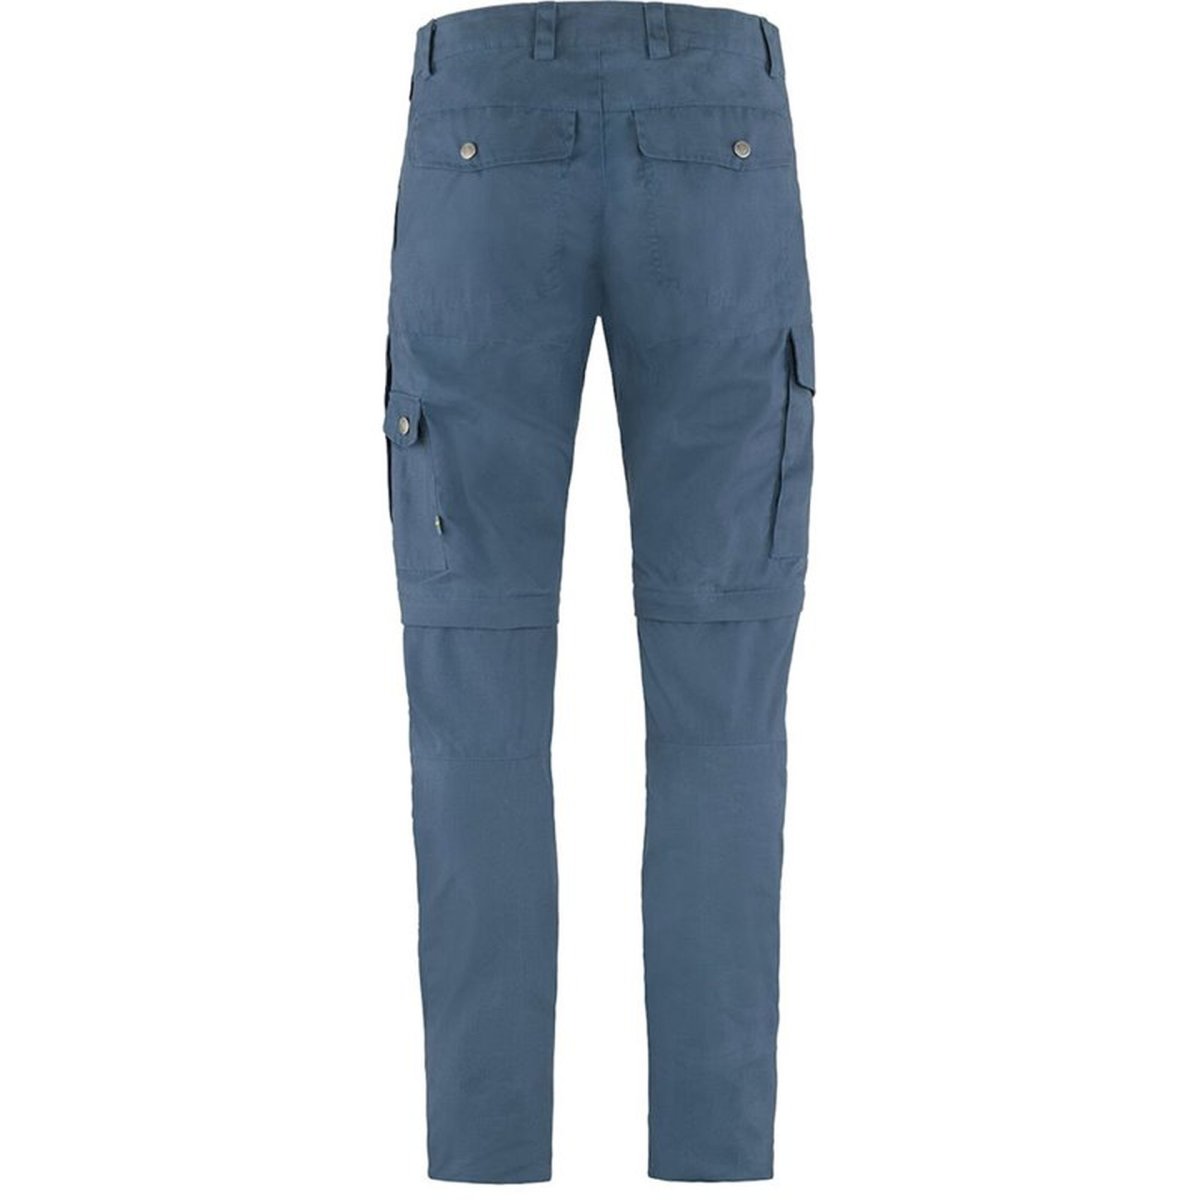 Fj&auml;llr&auml;ven Karl Pro Zip-off Trousers 81463  indigo blue  G-1000 Zipphose Herrenhose